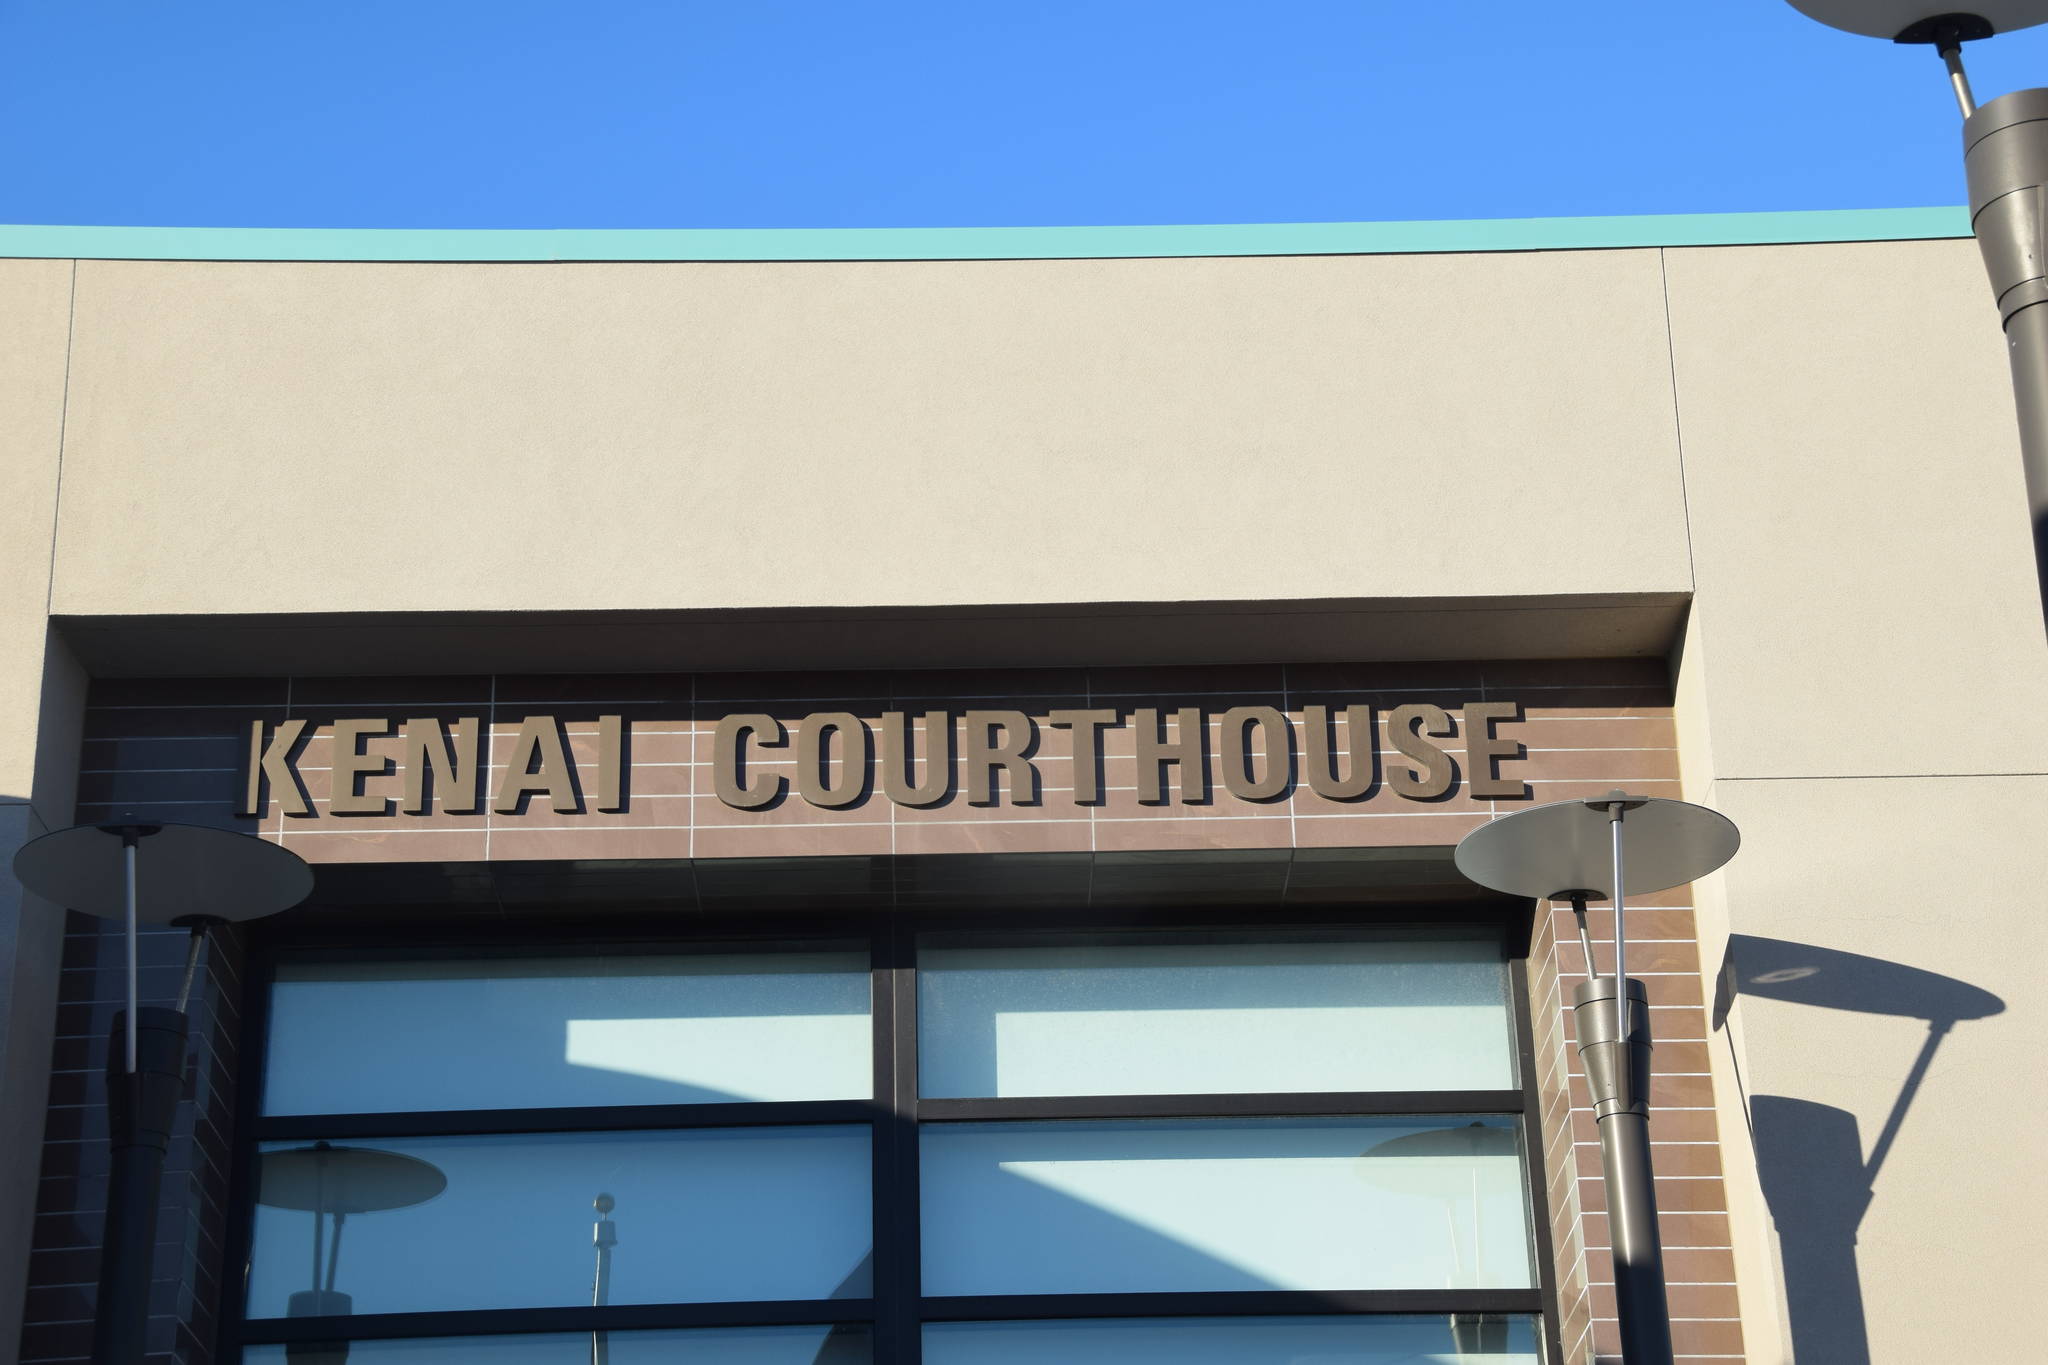 Kenai Courthouse is photographed on Feb. 26, 2019 in Kenai, Alaska. (Clarion file)